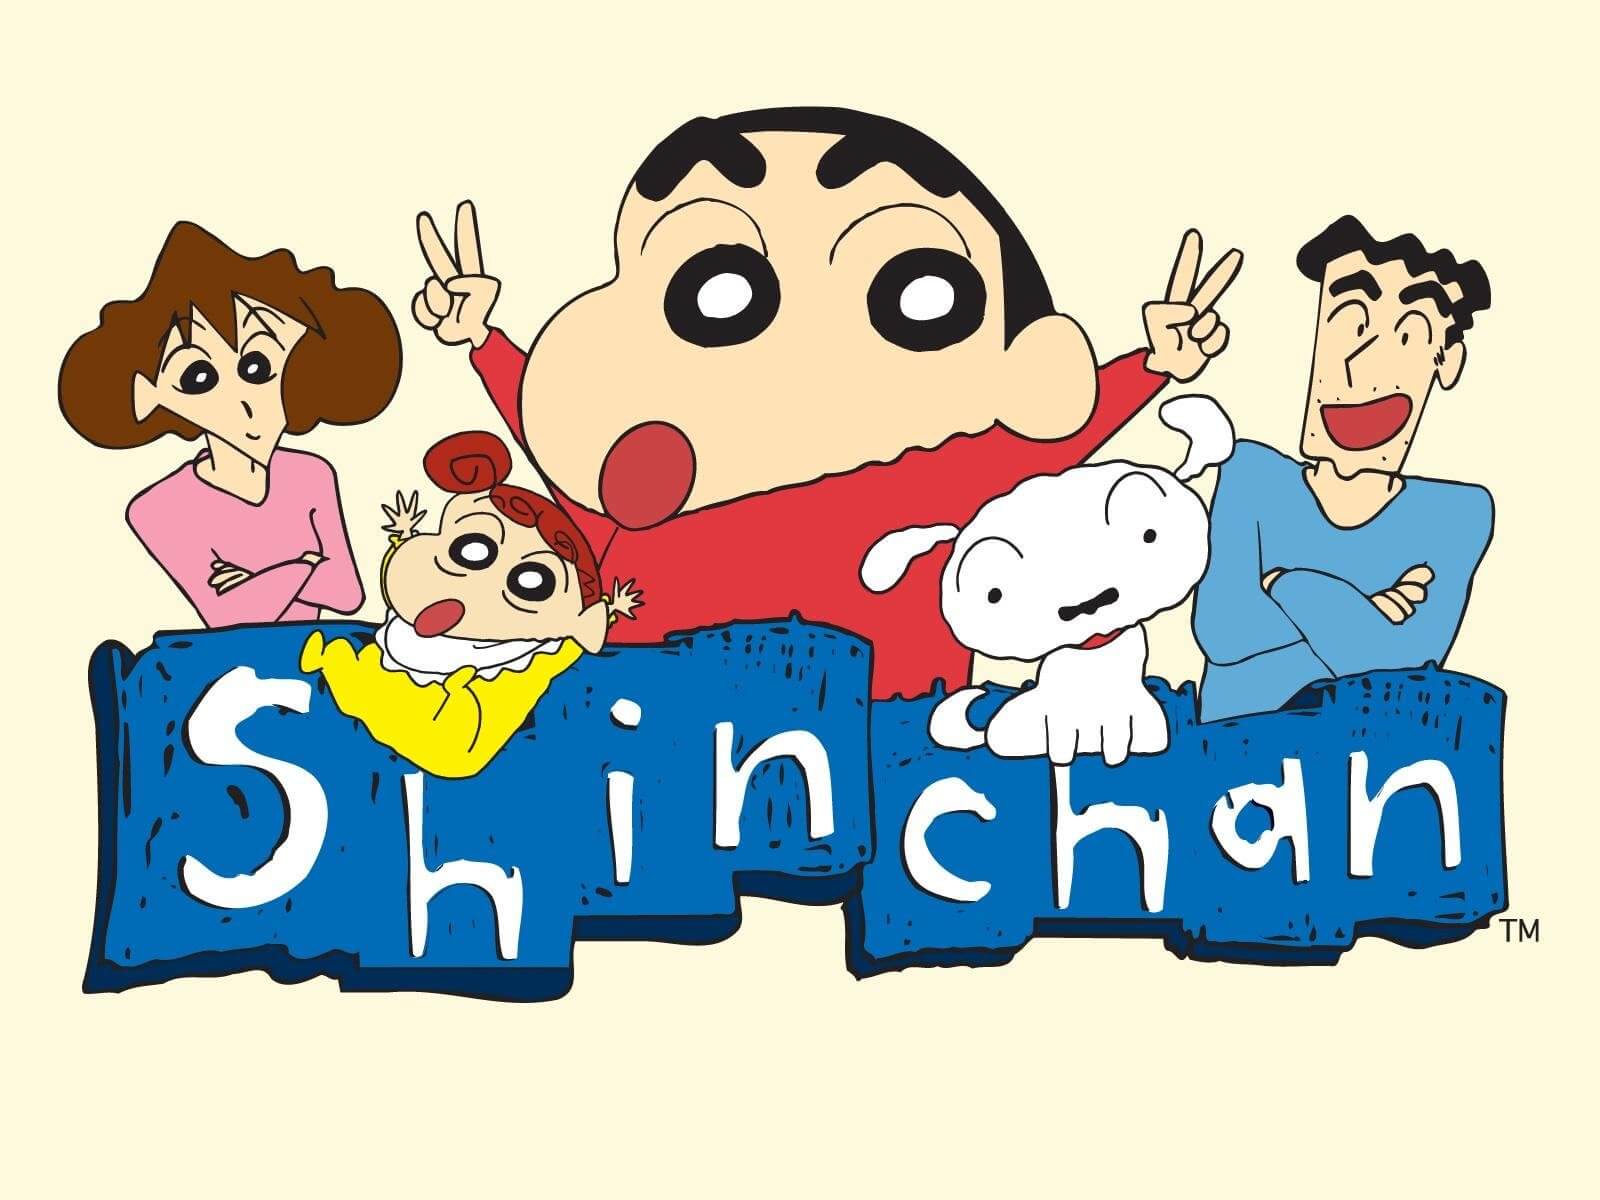 Best Friend Drawings - Sinchan and Crayon Shin Chan